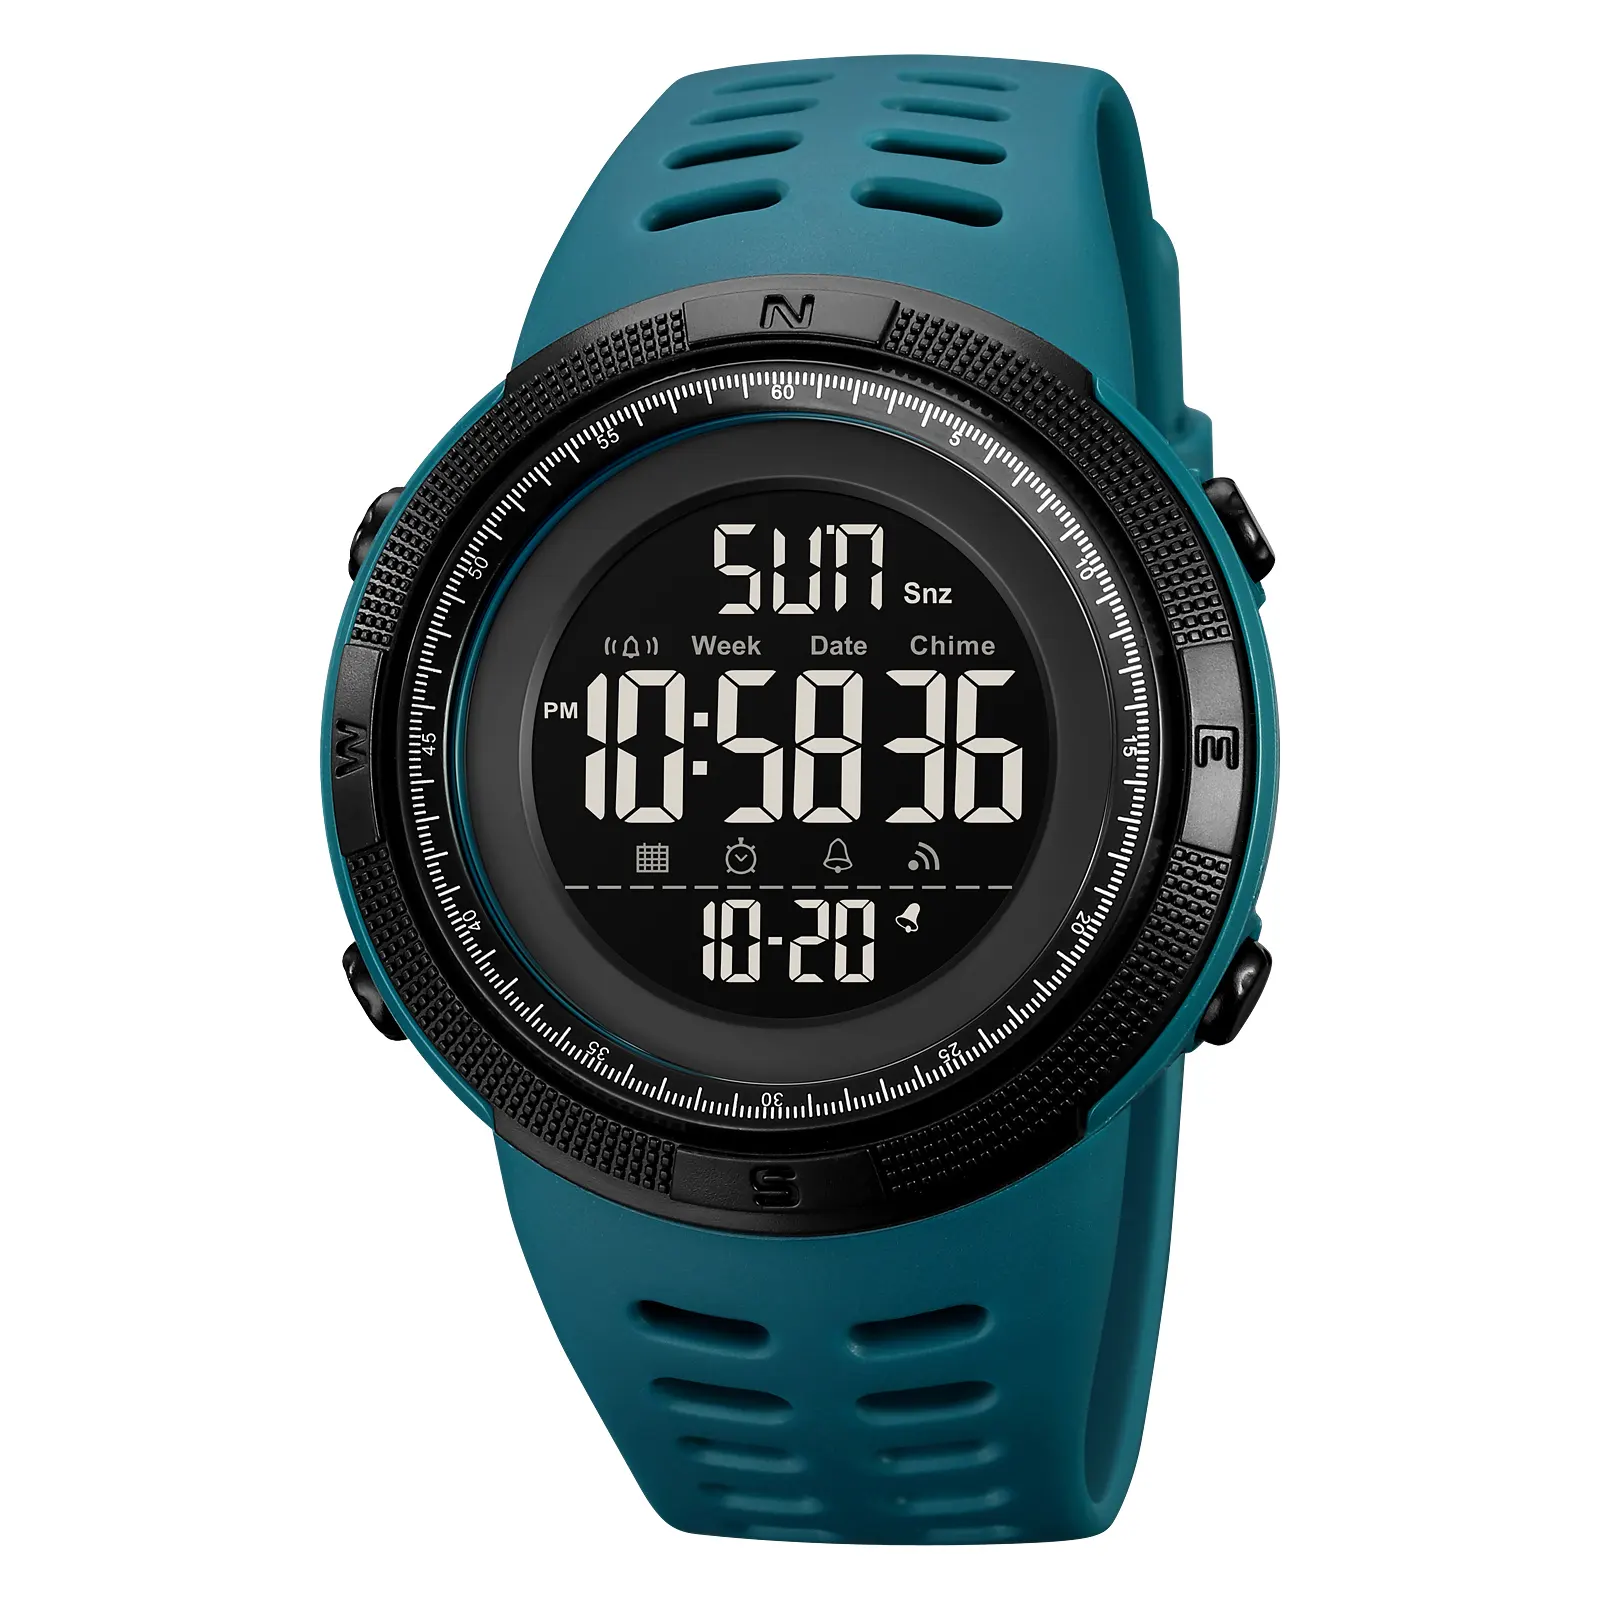 Skmei 2070 Sport style digital watch camouflage analog watches men functional design